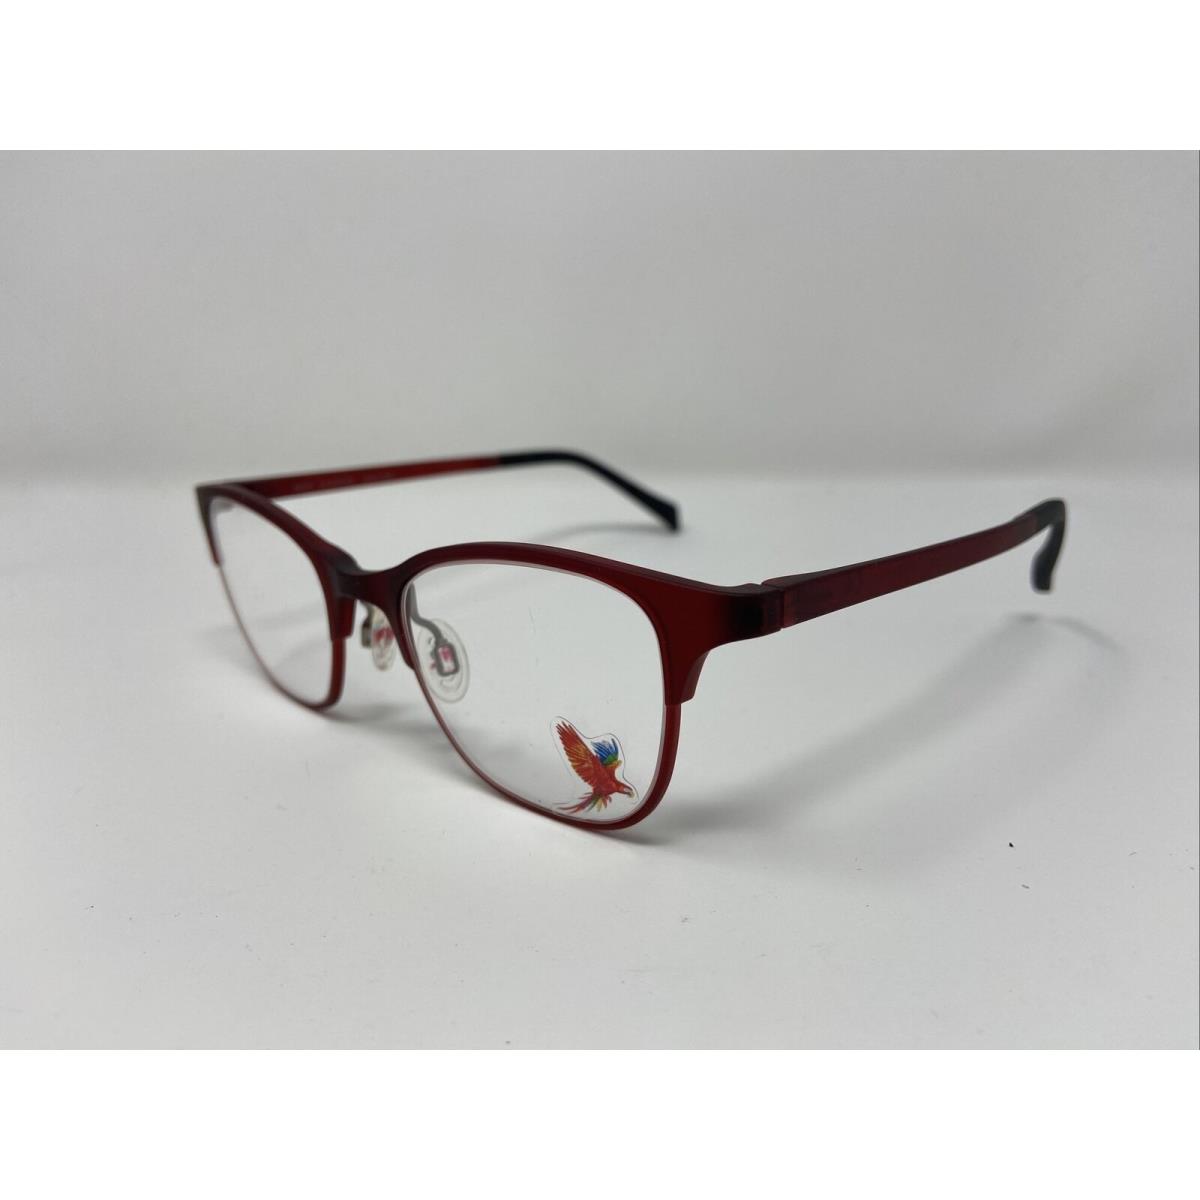 Maui Jim eyeglasses  - Red Frame 0